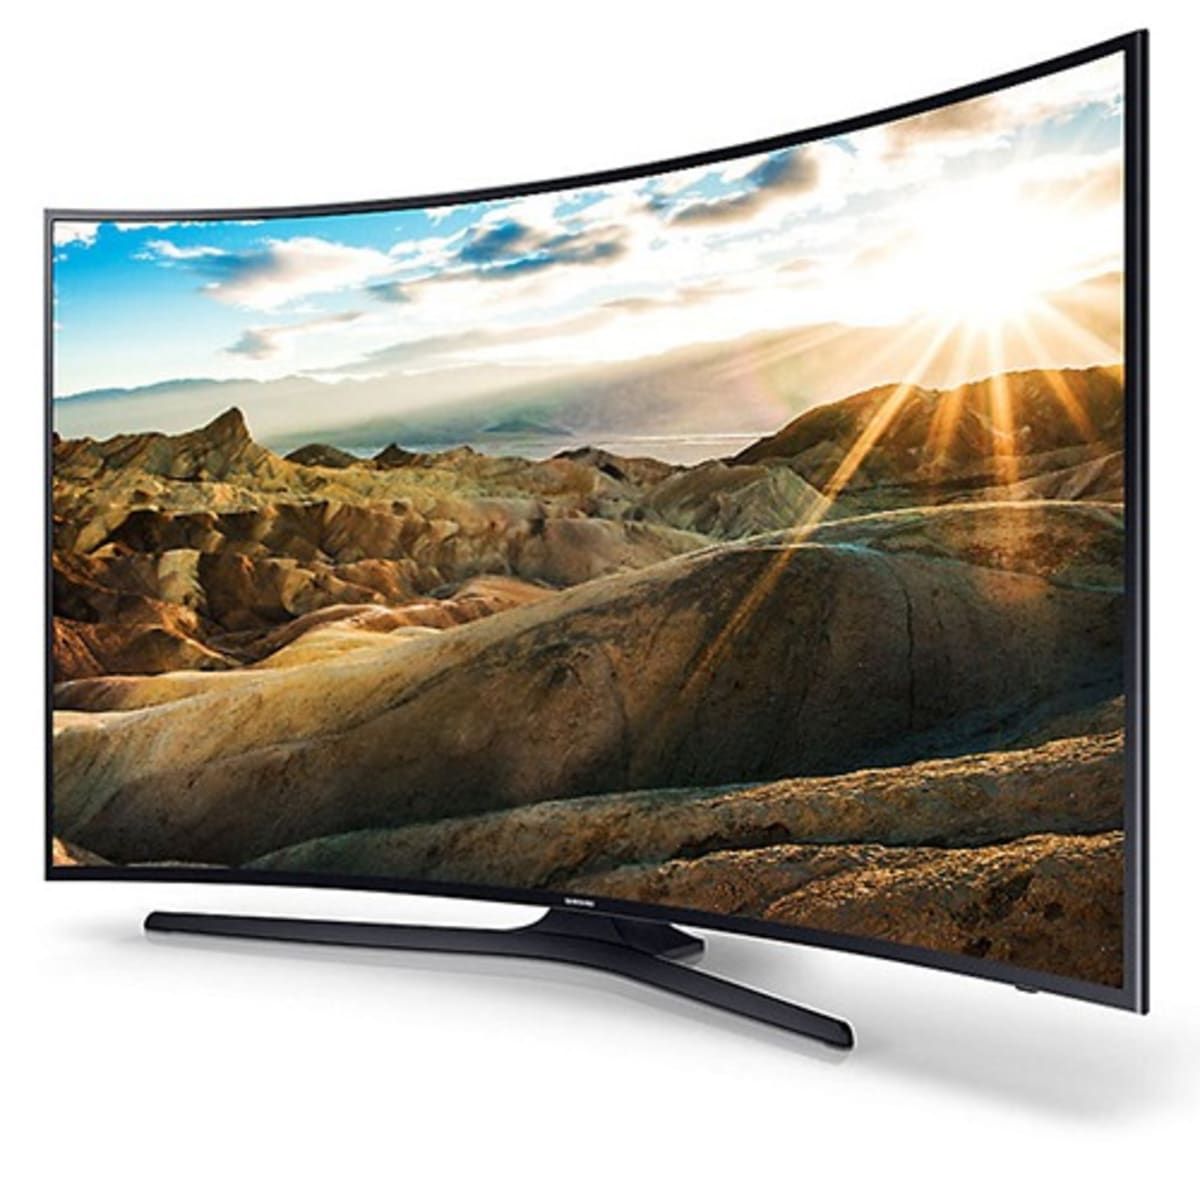 Televisor Samsung 55 Smart TV